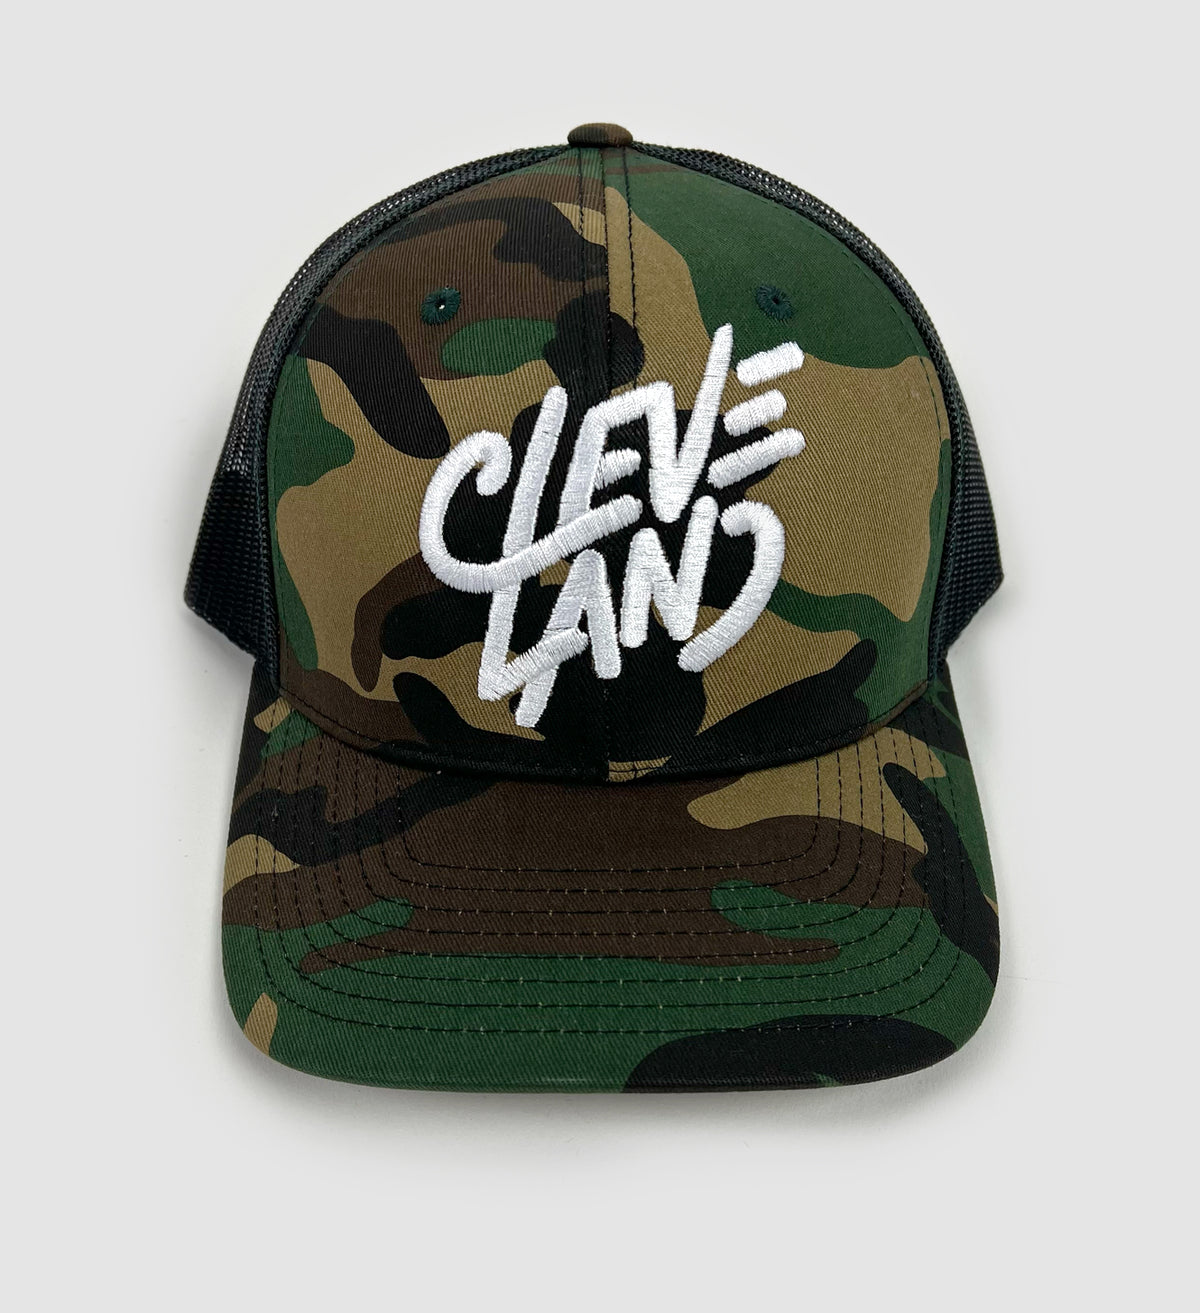 Cleveland Sketch Camo Mesh Hat